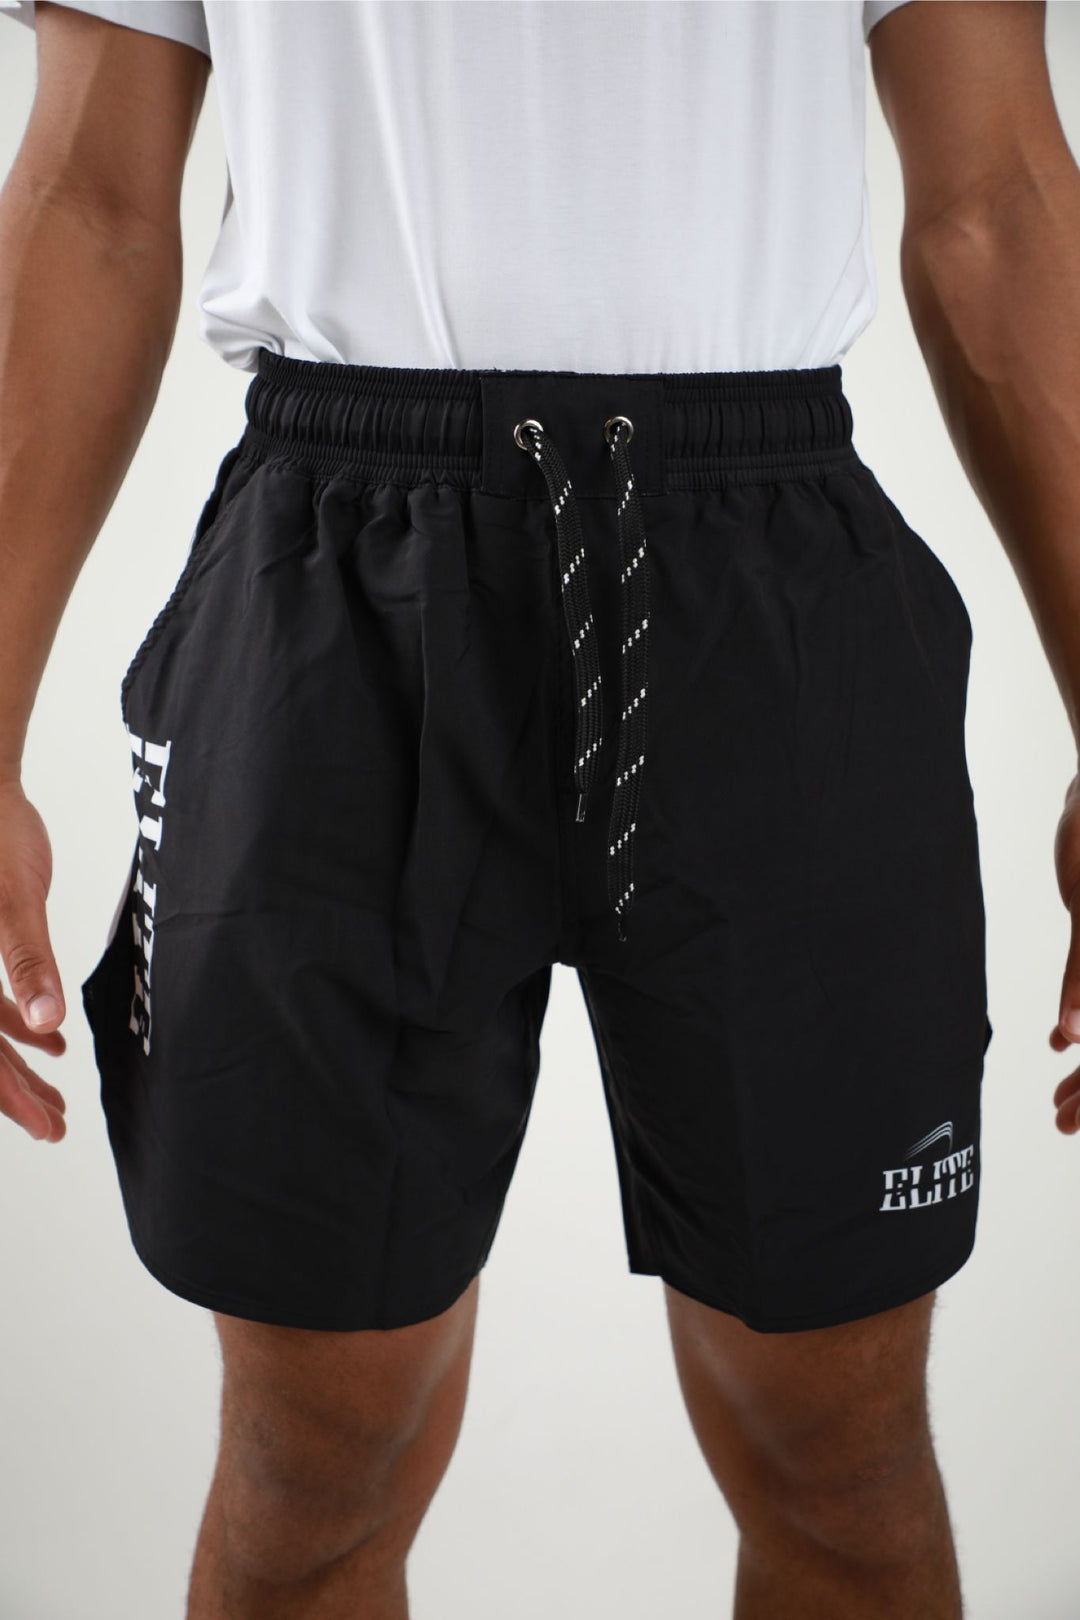 Elite Shorts  - Black